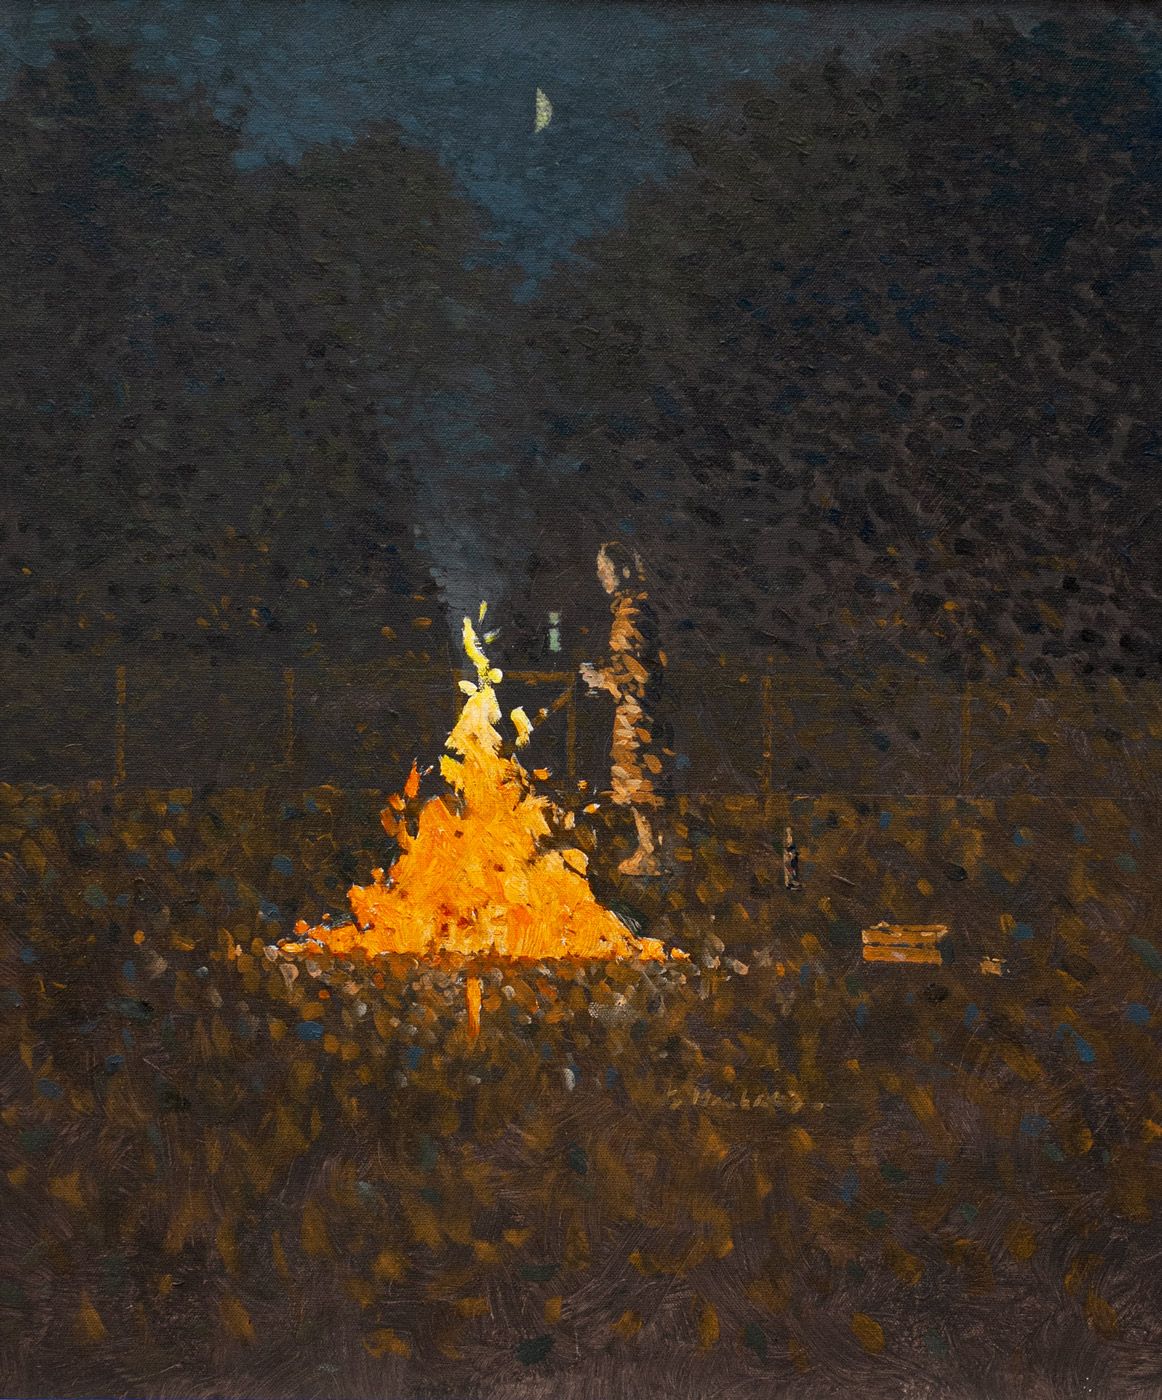 Contemplation, Nightfire Series by Simon Macleod